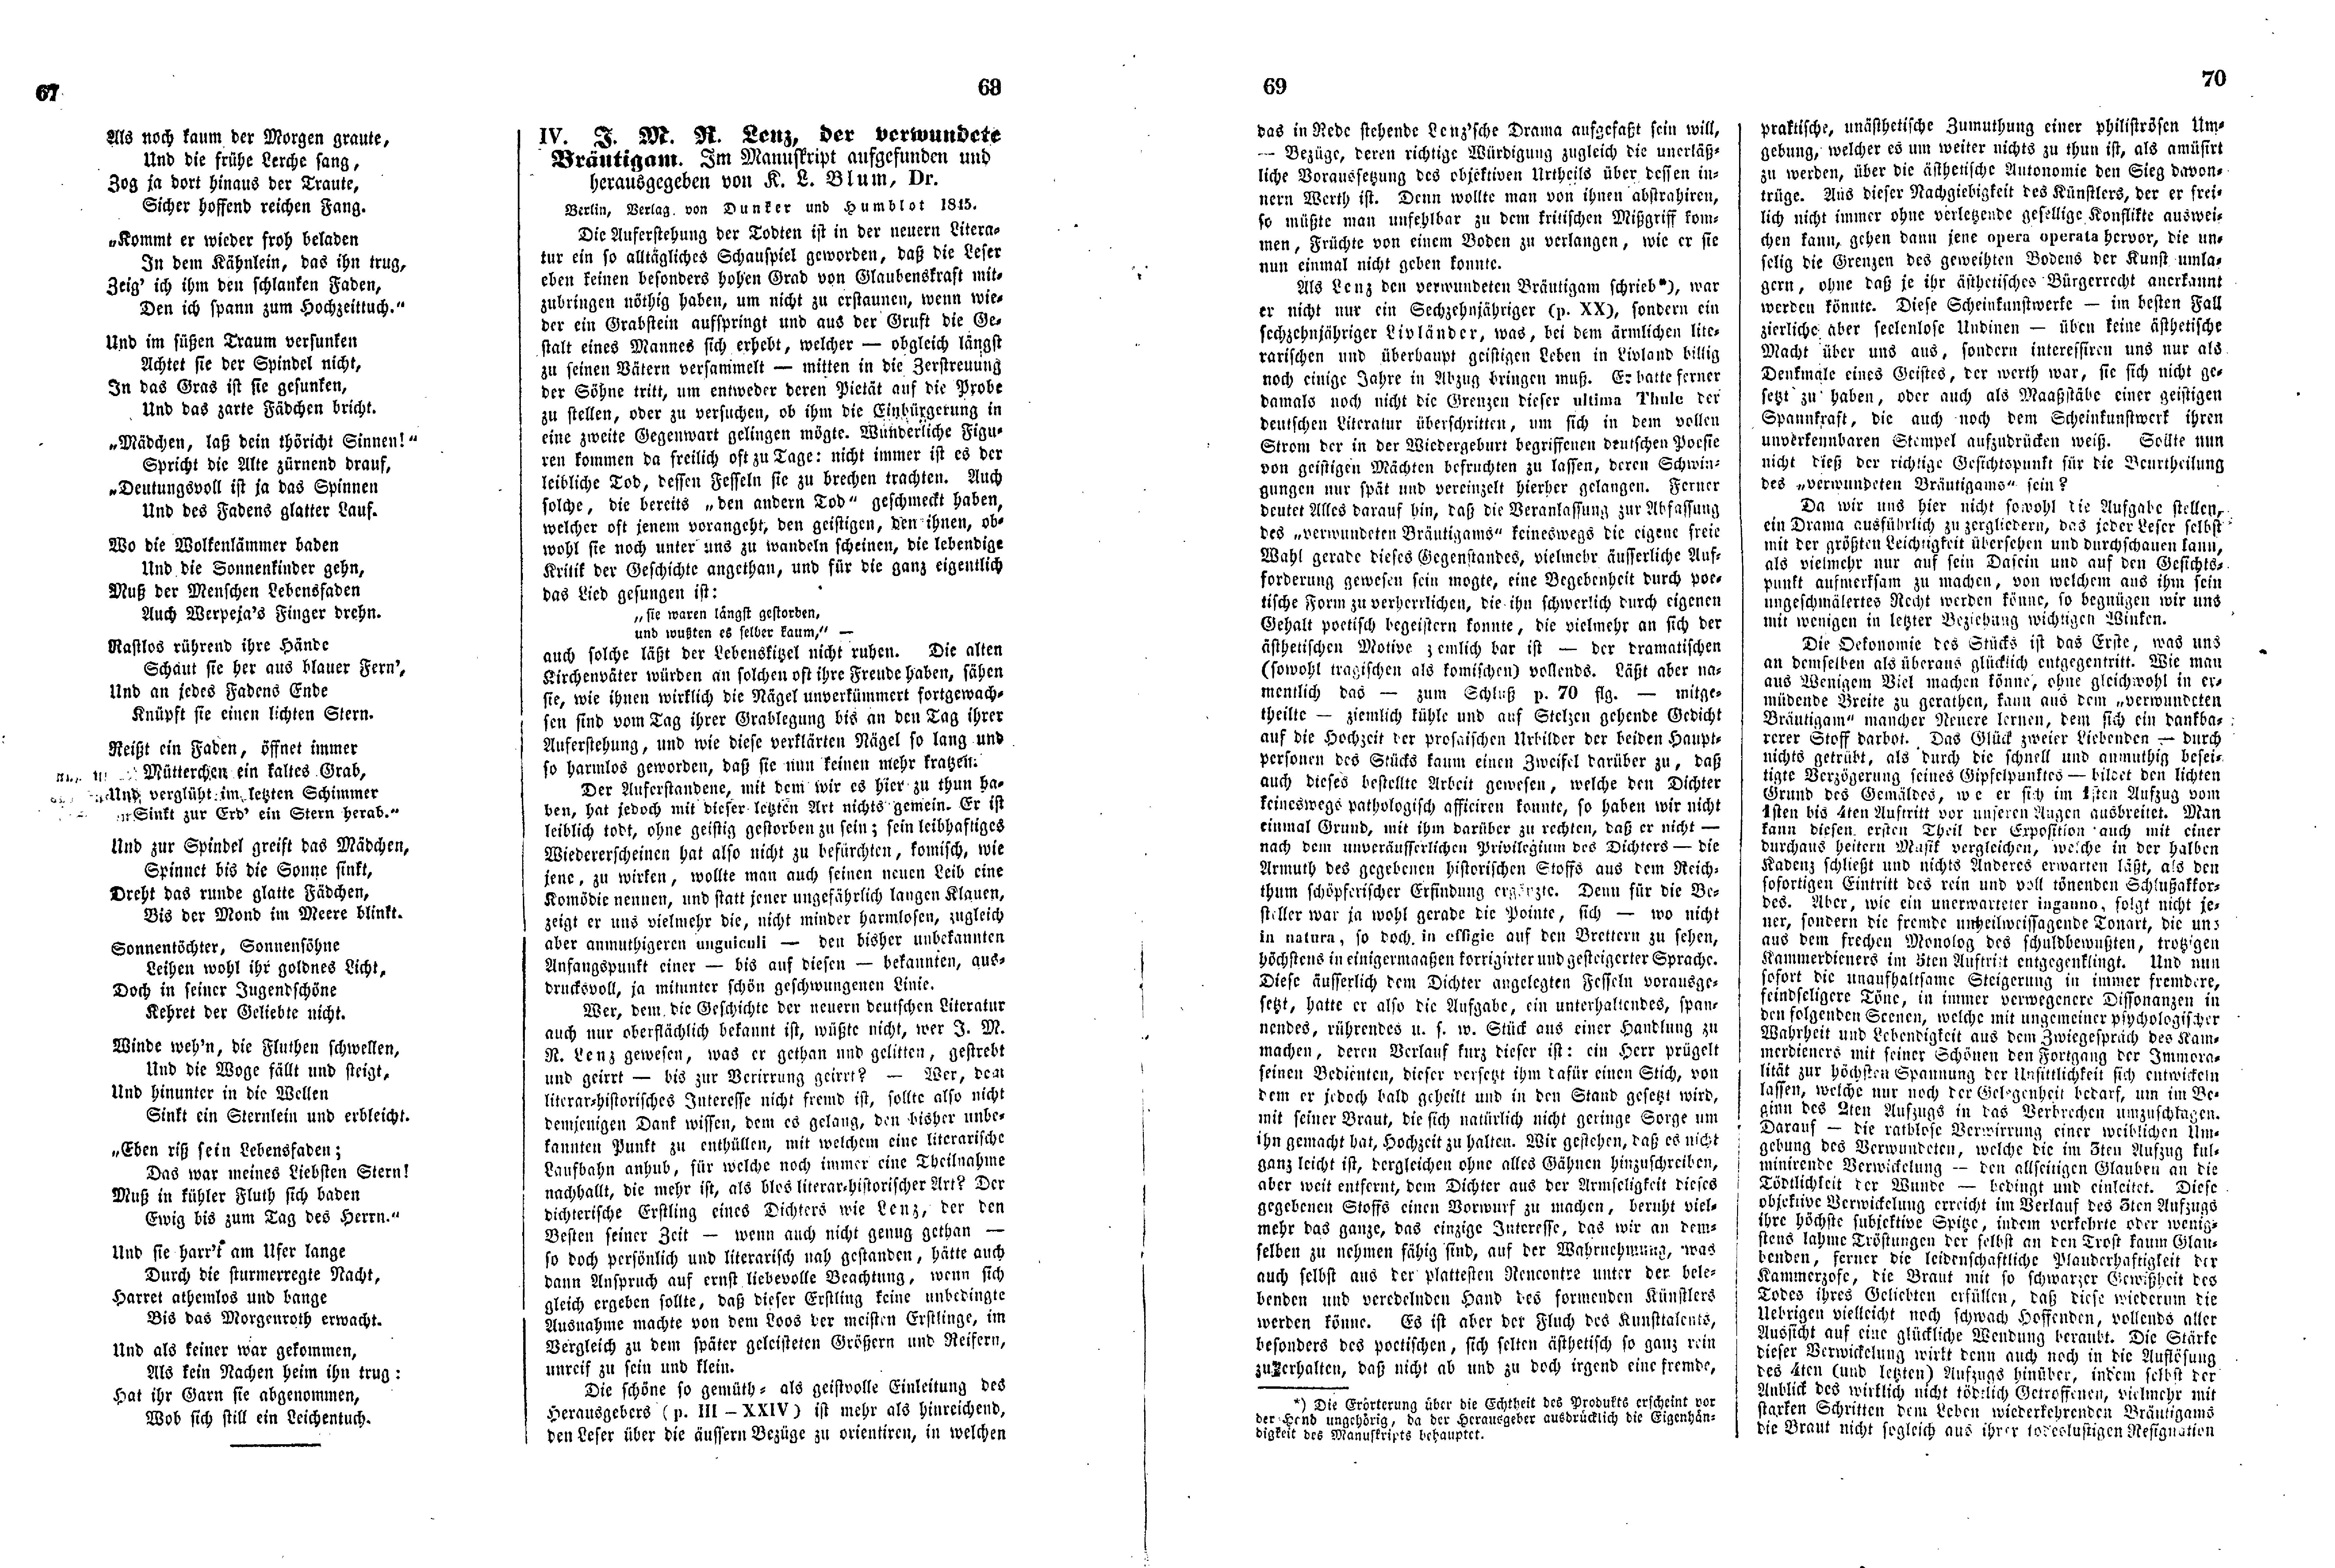 Das Inland [11] (1846) | 22. (67-70) Main body of text